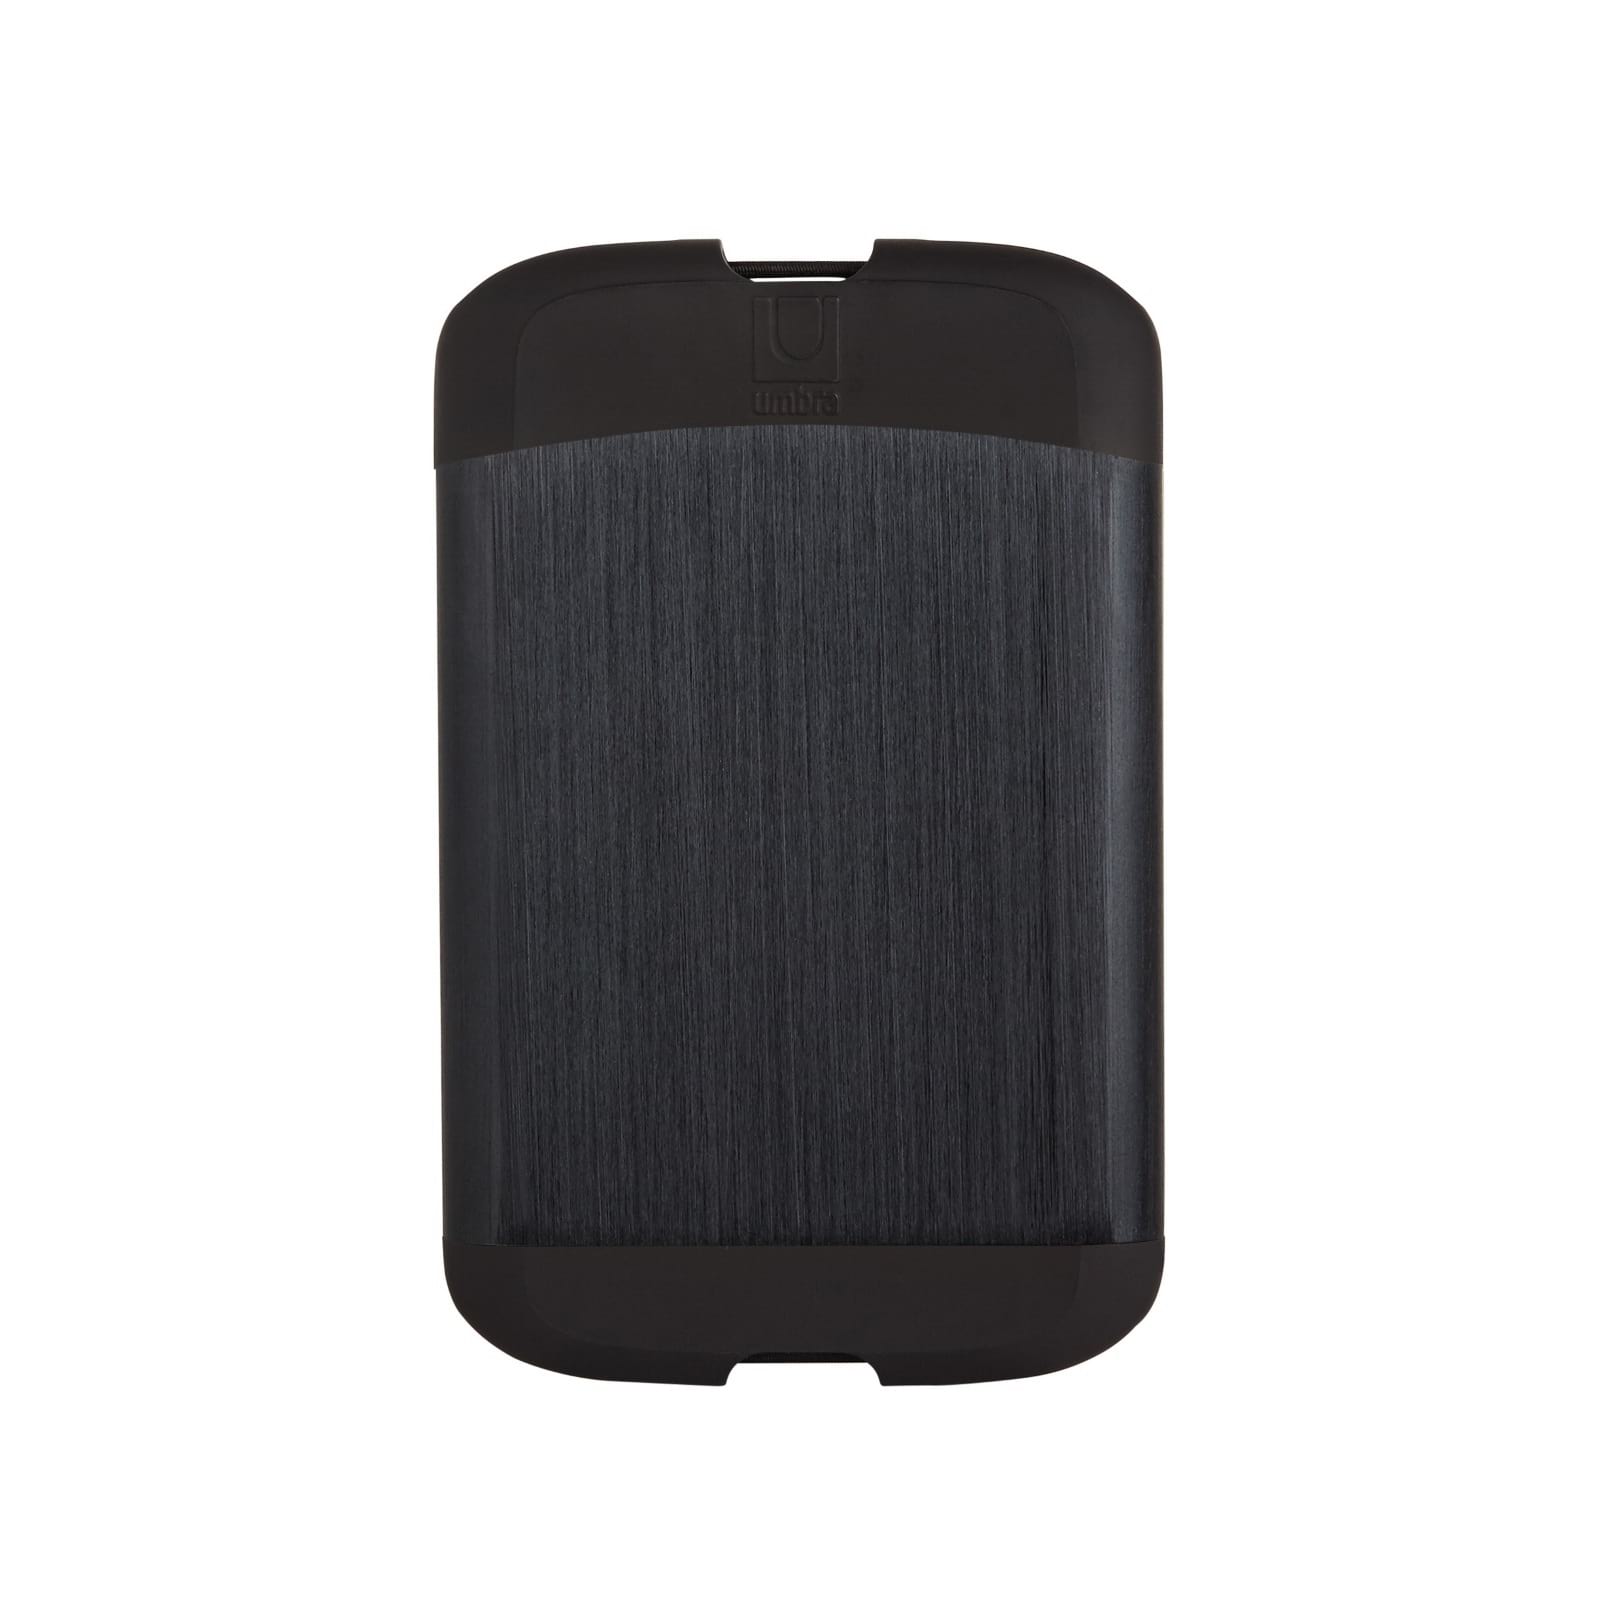 Umbra Bungee Card Holder Wallet (Black) | Design Is This